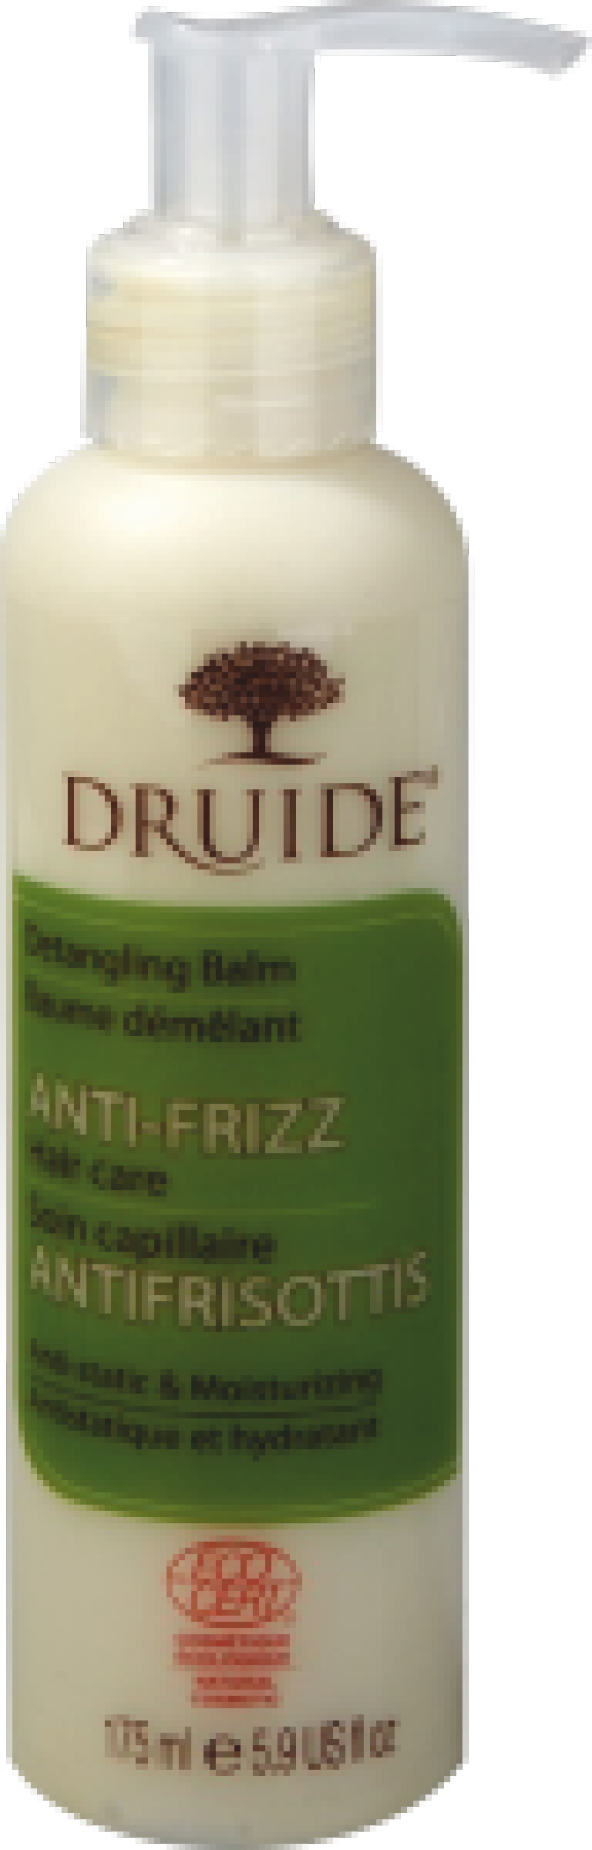 DRUIDE ANTI-FRIZZ Detangling, Anti-static & Moisturizing Hair Balm